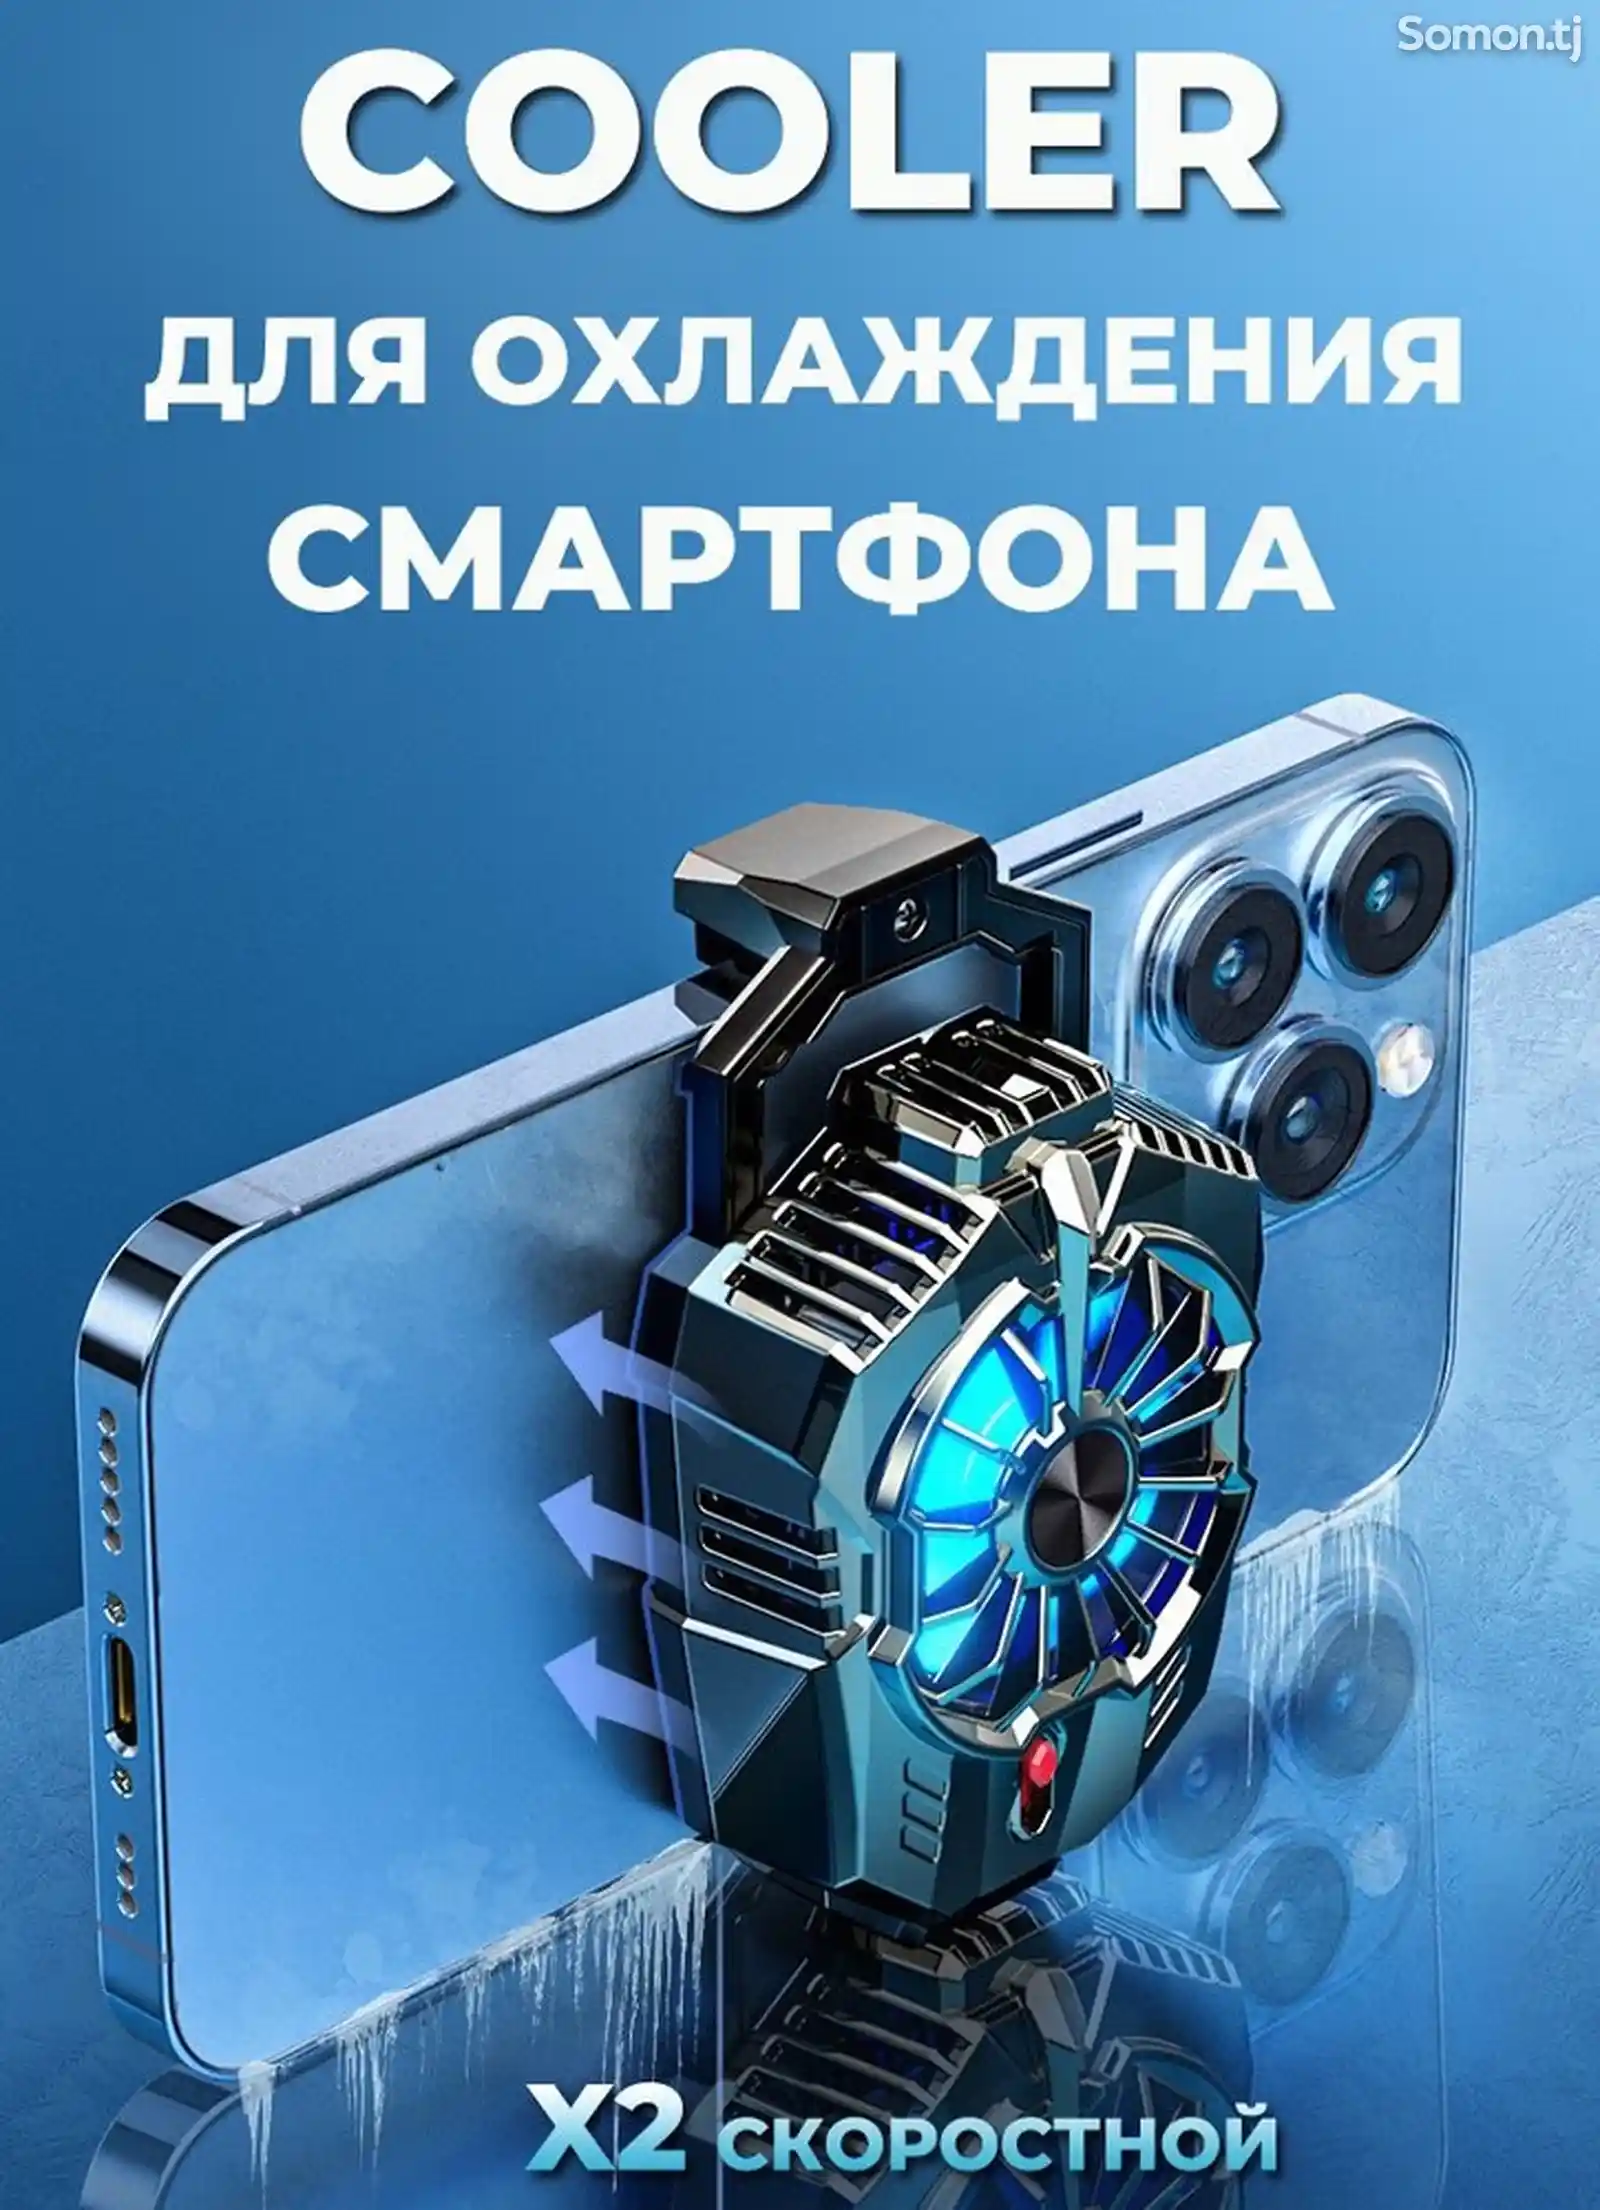 Вентилятор охладитель для смартфона X20-5